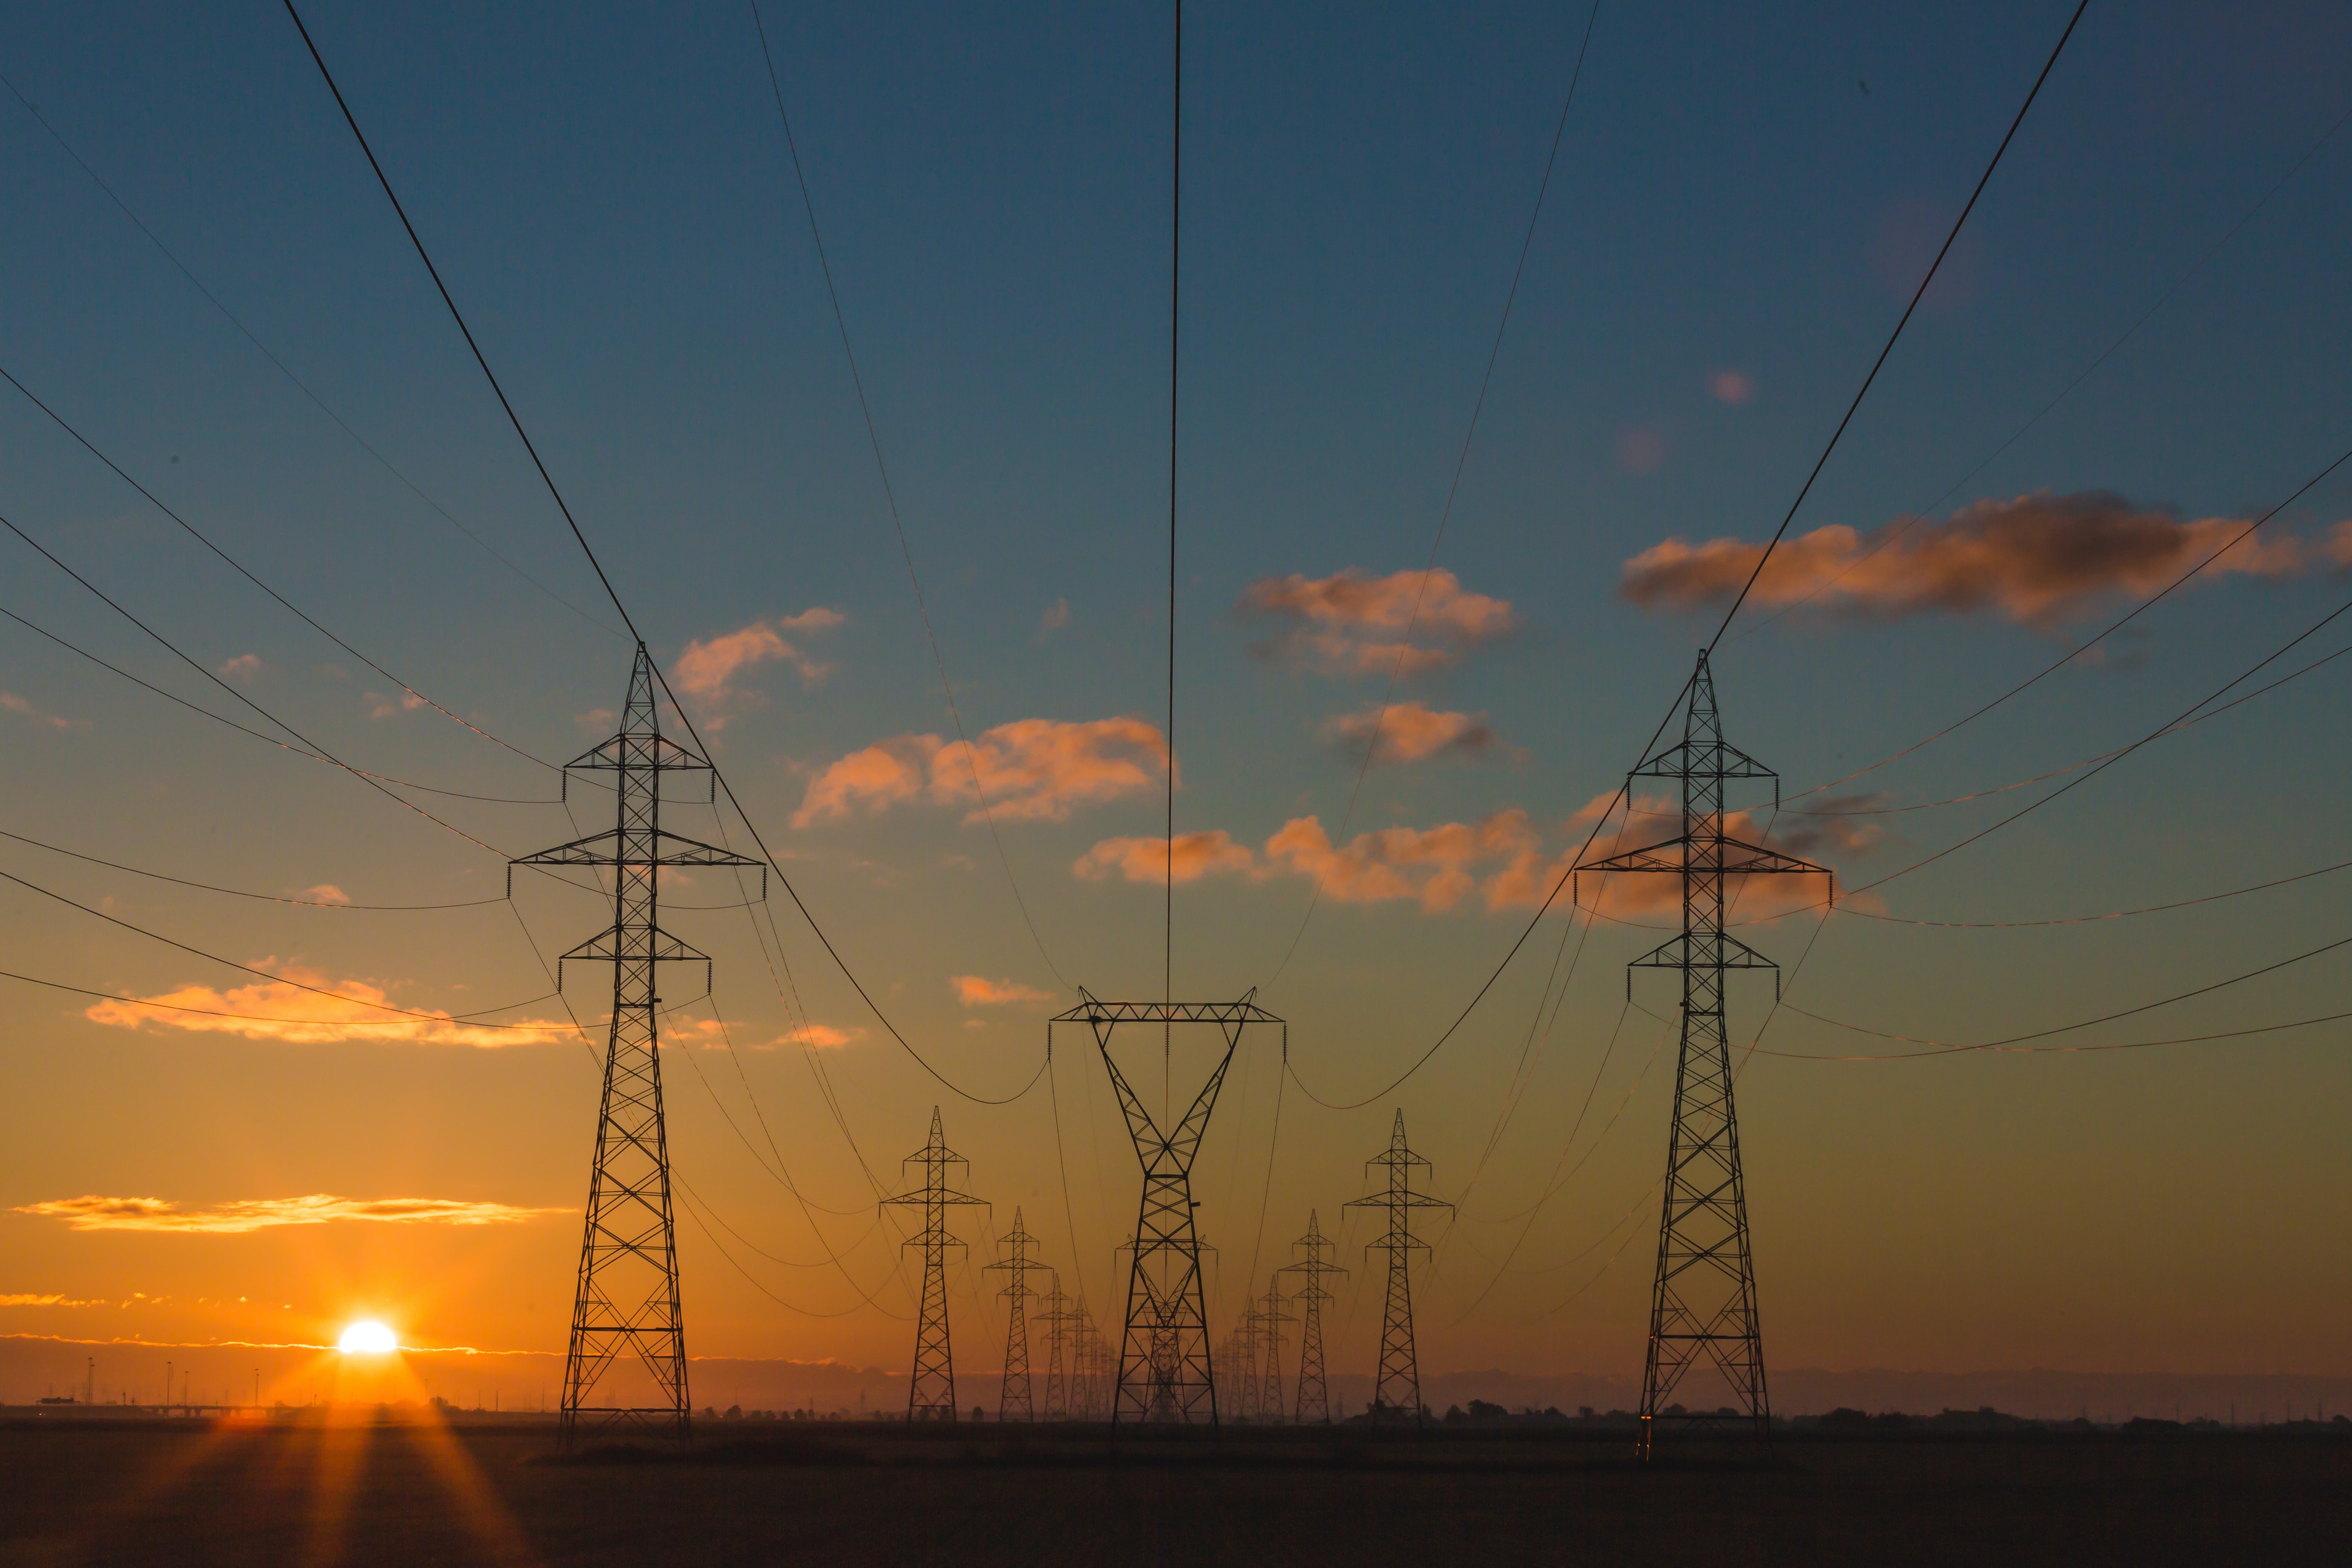 Power transmission lines at sunset; image by Matthew Henry, via Unsplash.com.